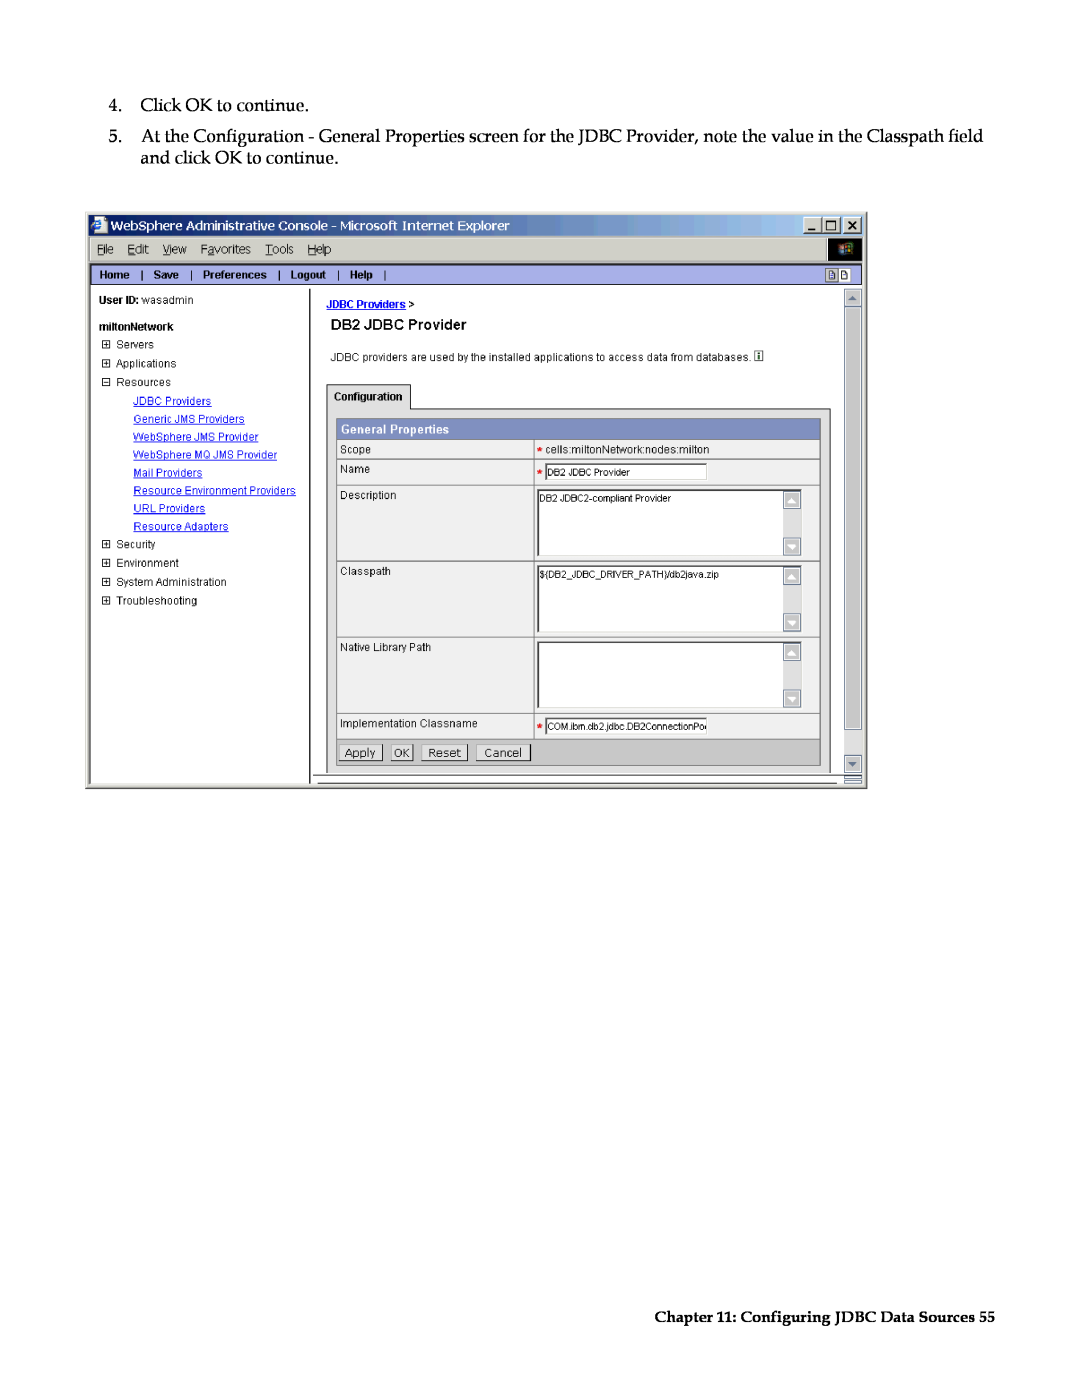 IBM G210-1784-00 manual Click OK to continue, Configuring JDBC Data Sources 